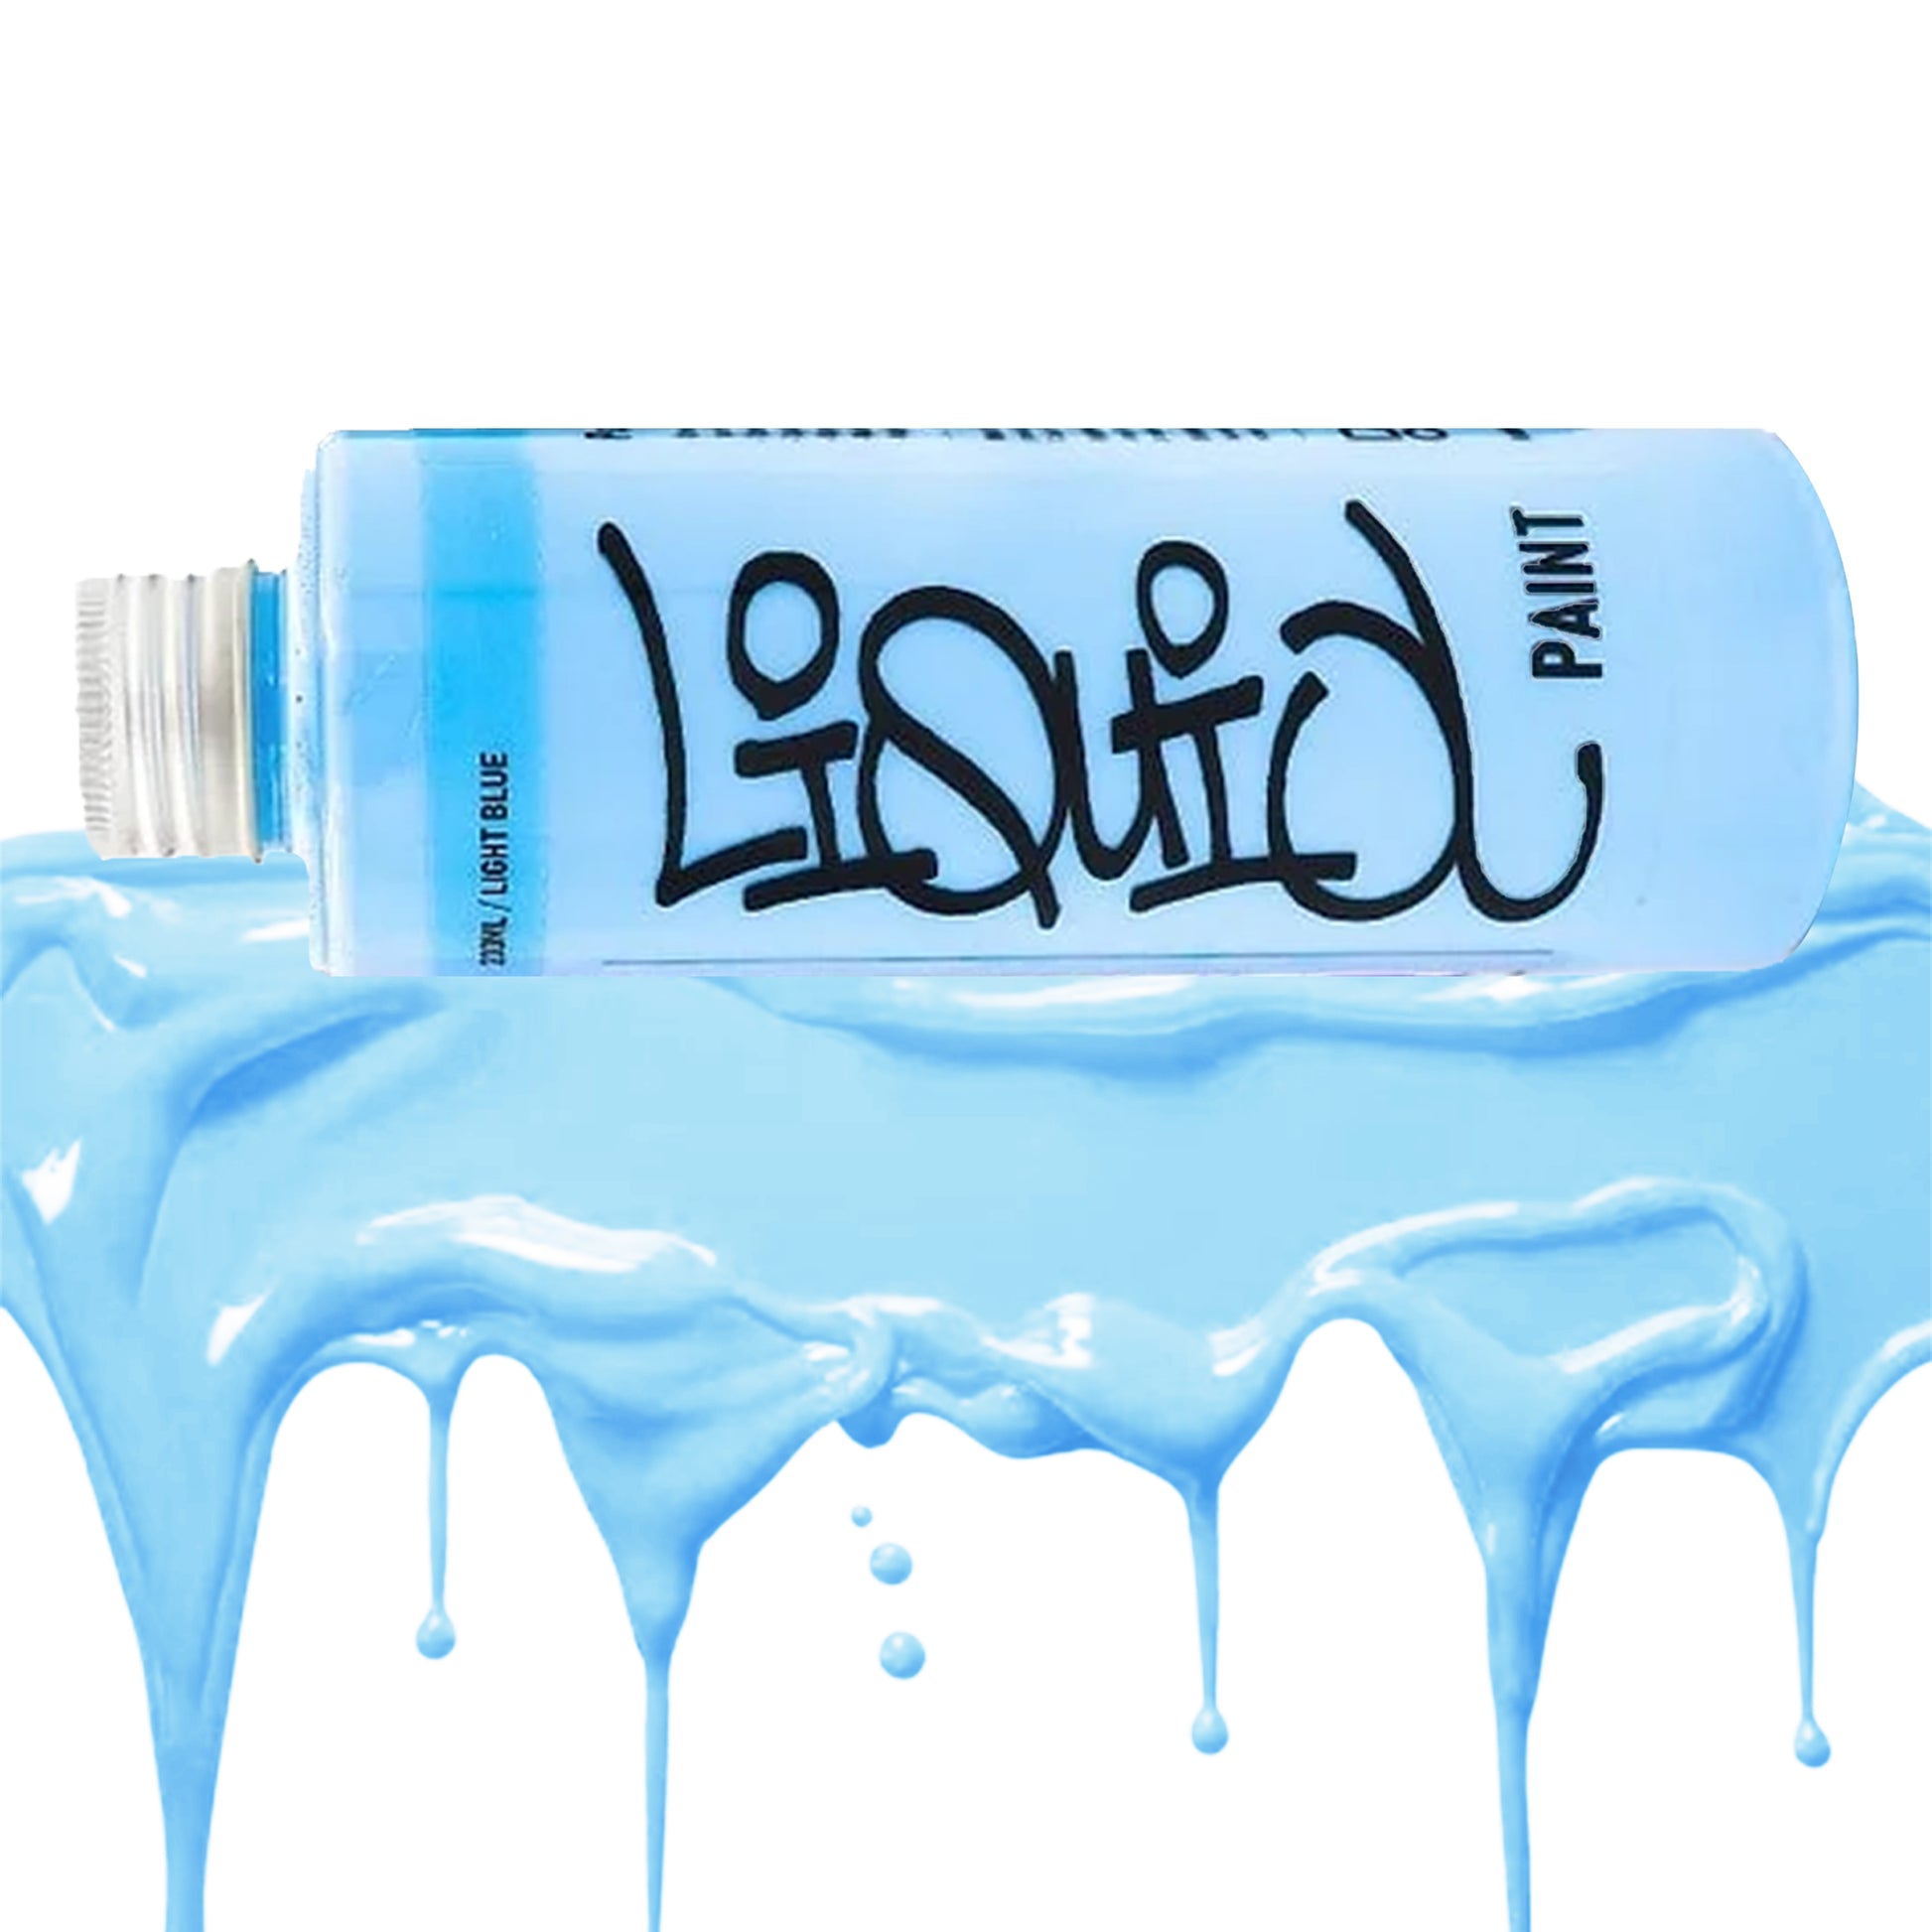 Light Blue bottle of Liquid refill Ink on a dripping light blue swatch